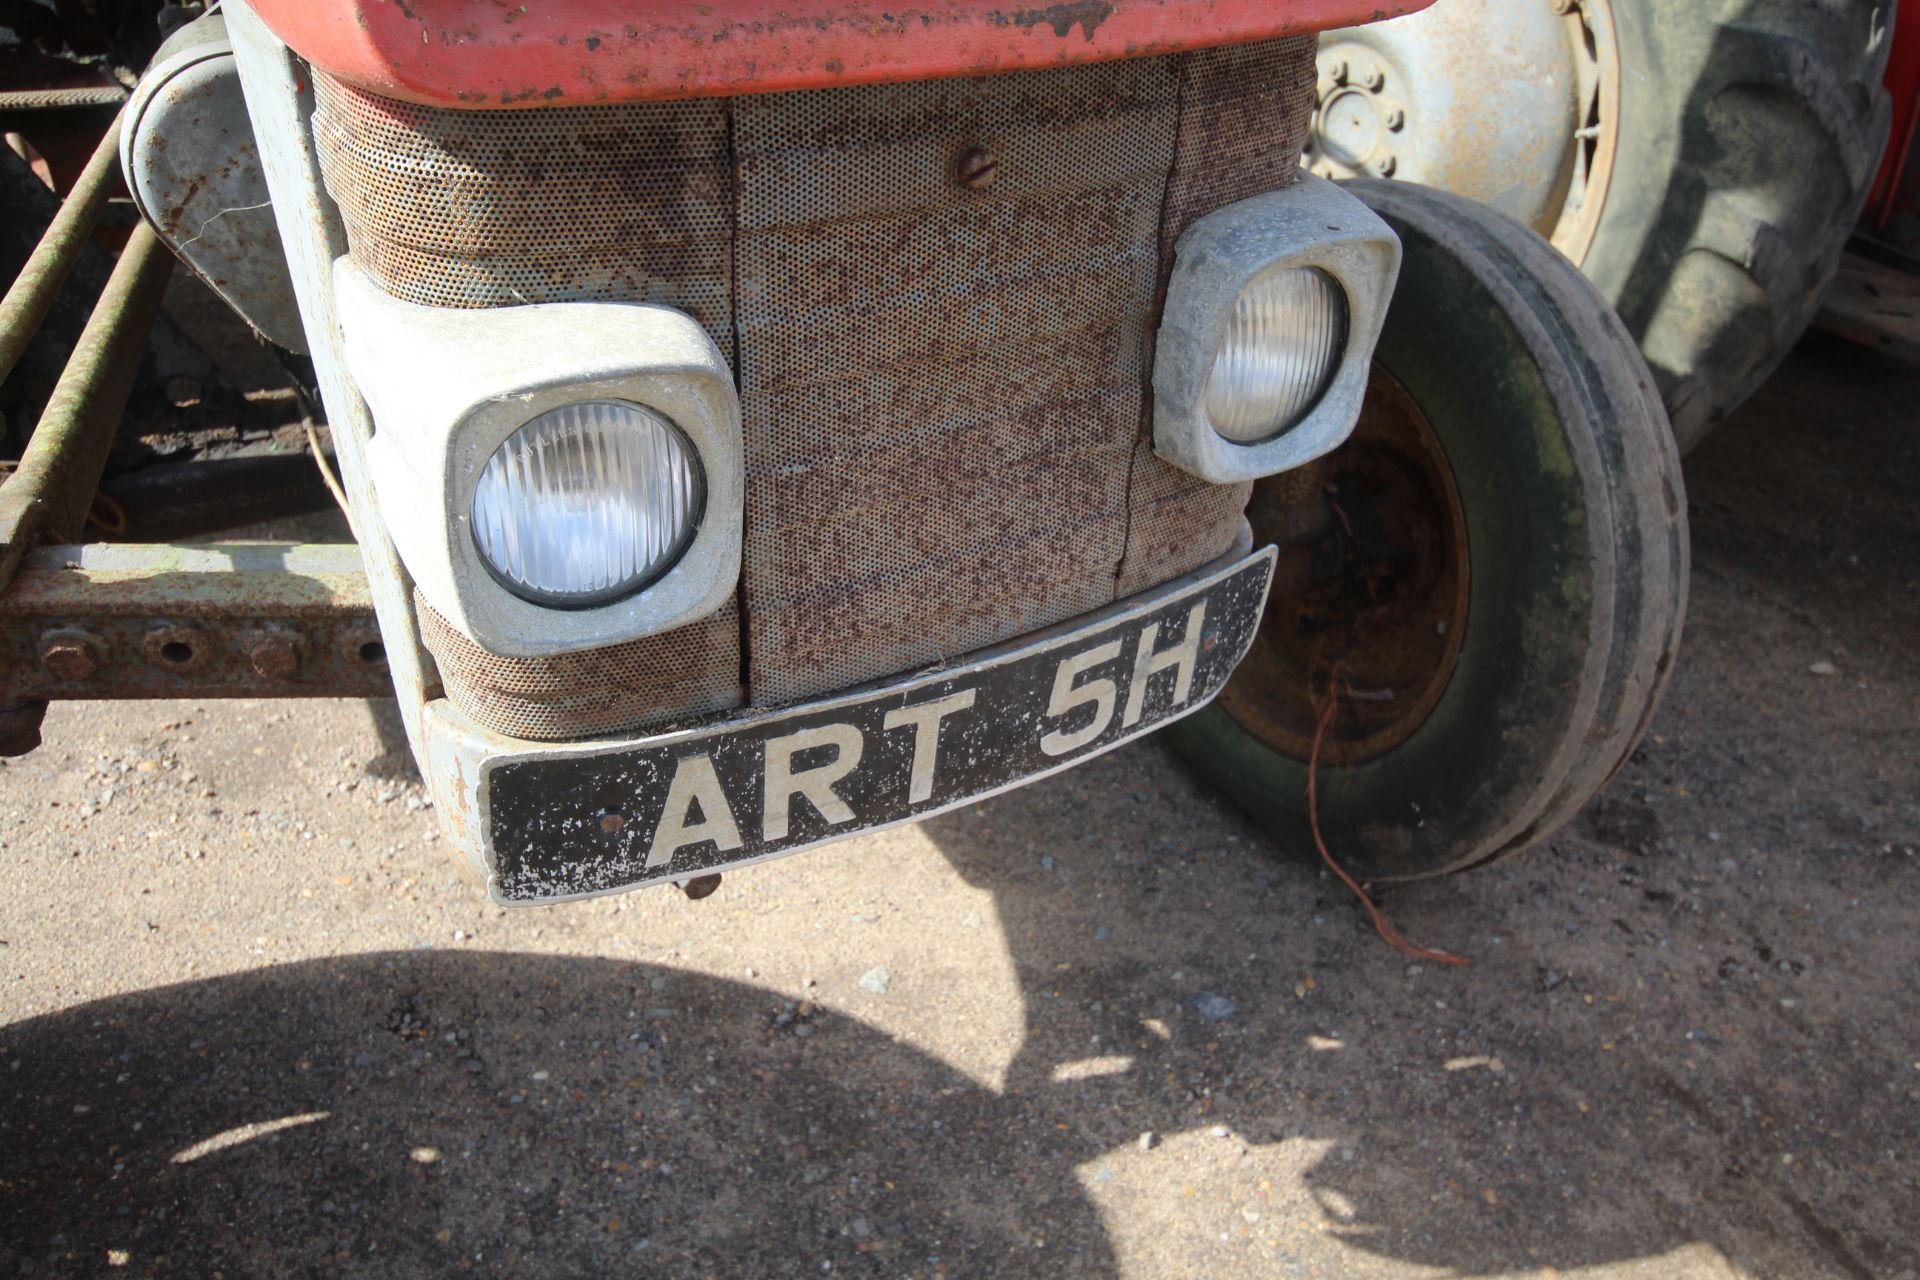 Massey Ferguson 135 2WD tractor. Registration ART 5H. Date of first registration 07/11/1969. - Image 6 of 58